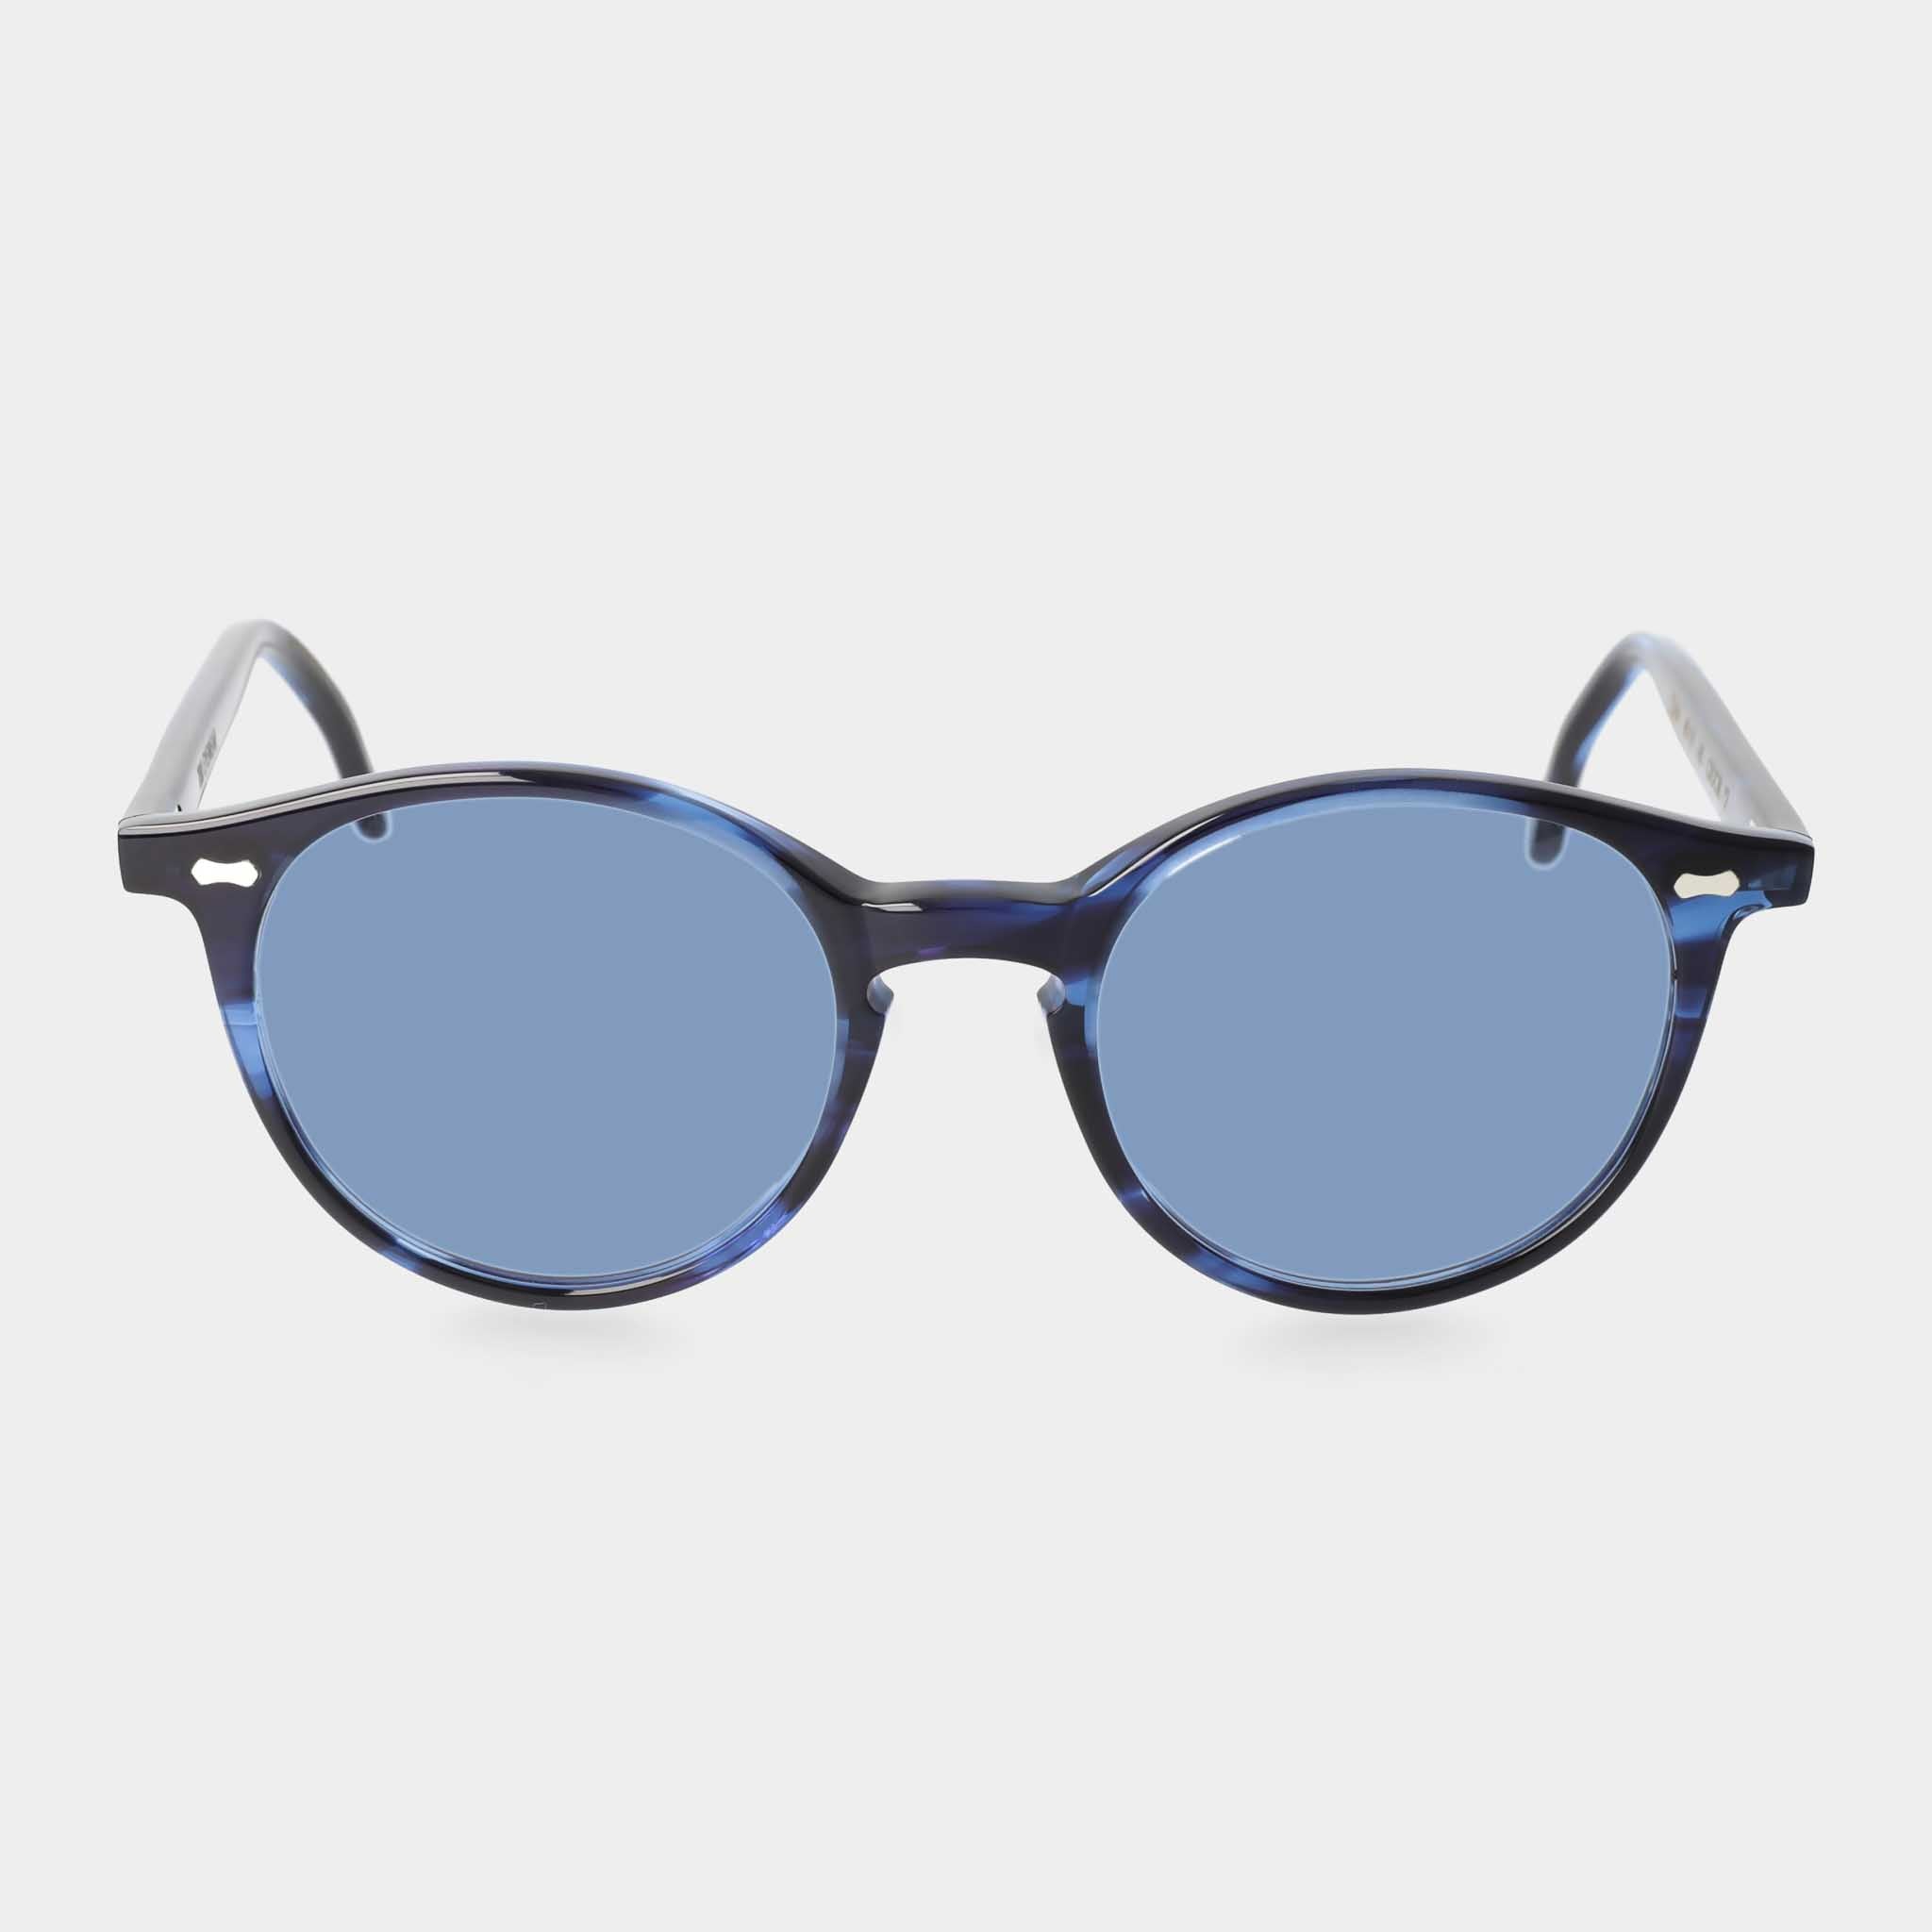 sunglasses-cran-ocean-blue-sustainable-tbd-eyewear-front